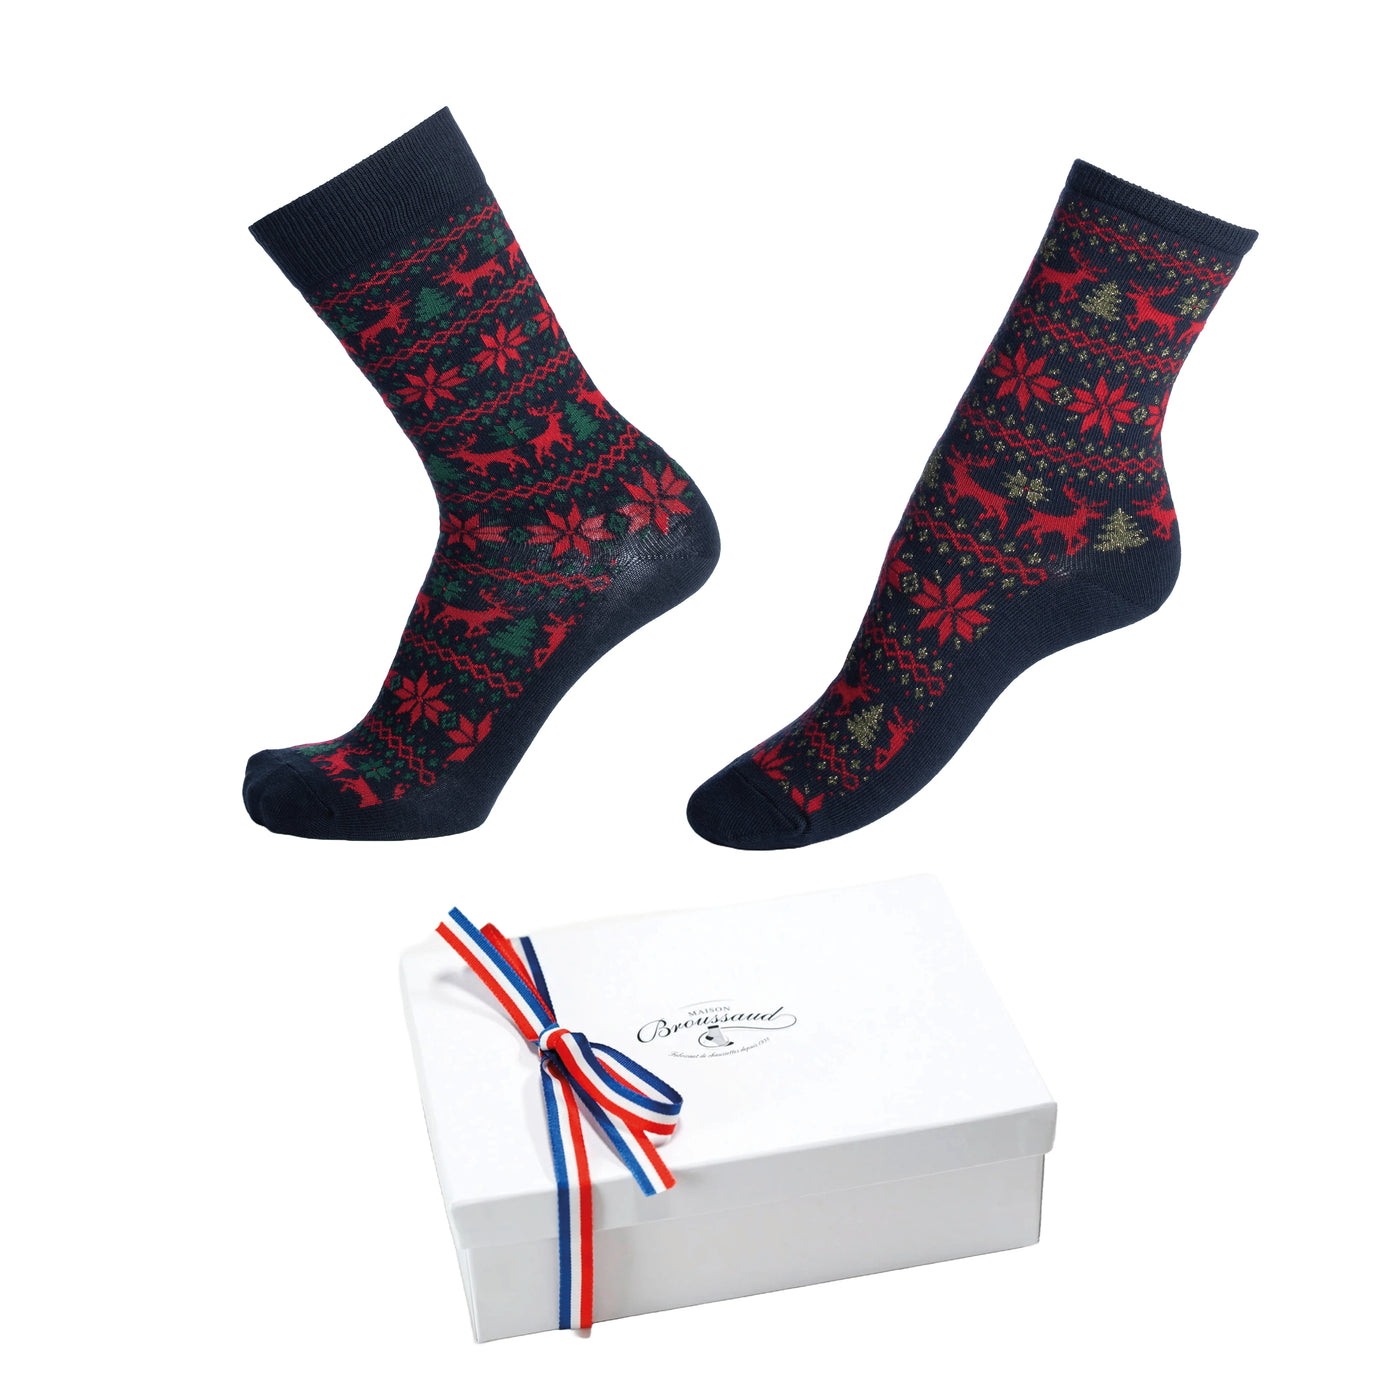 Duo Christmas box - men's and women's socks